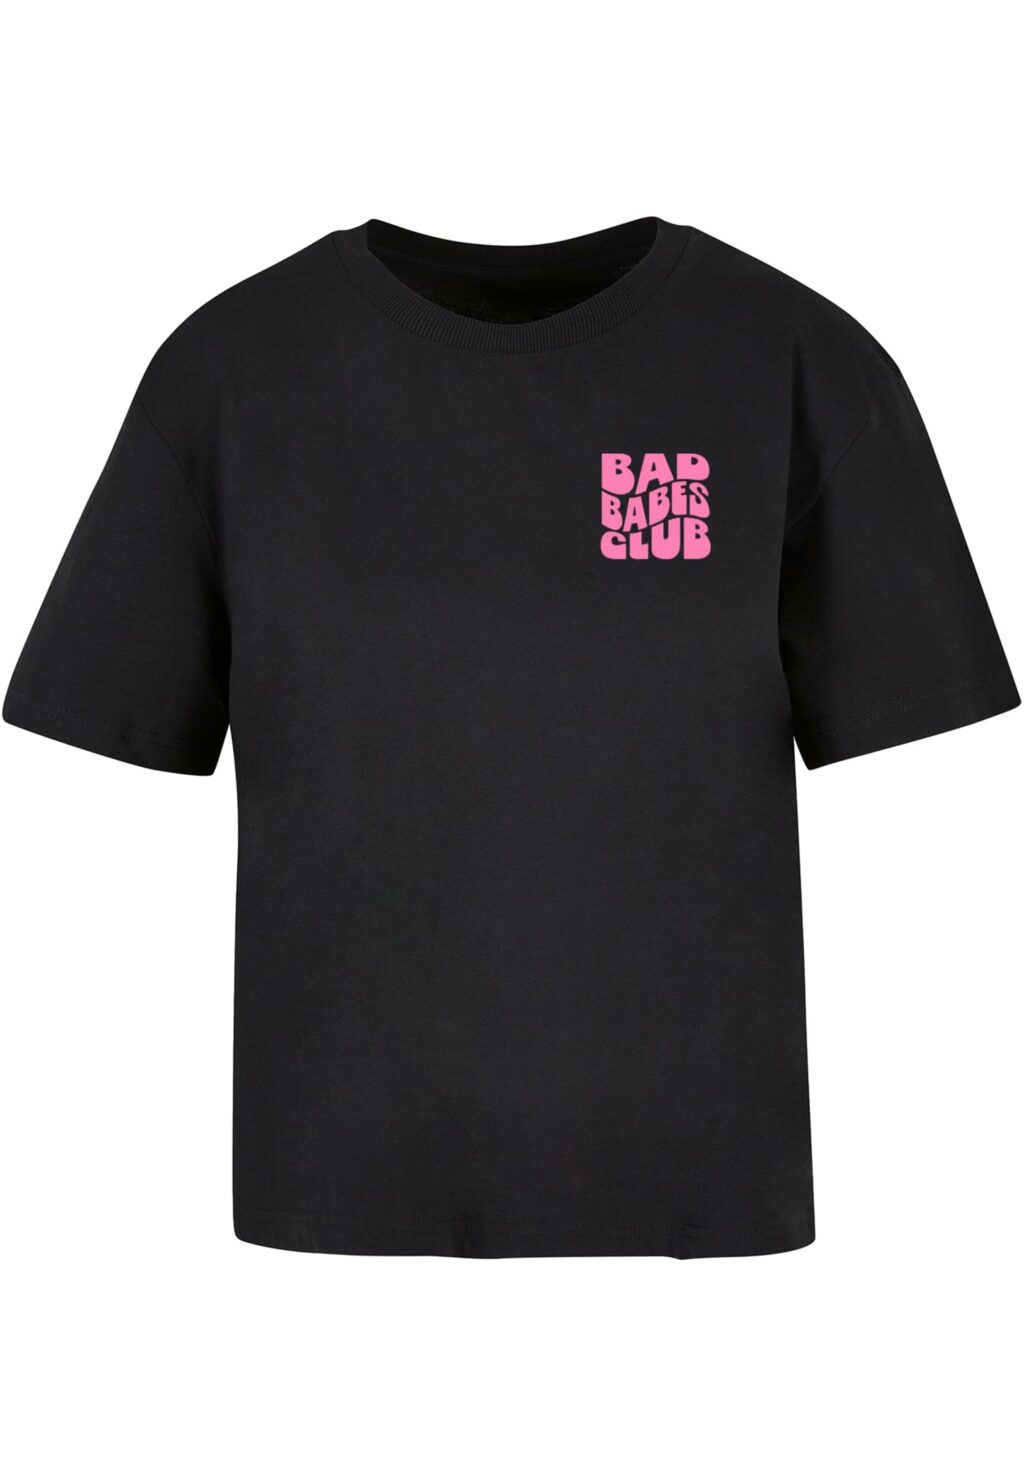 Bad Babes Club Tee black MST076